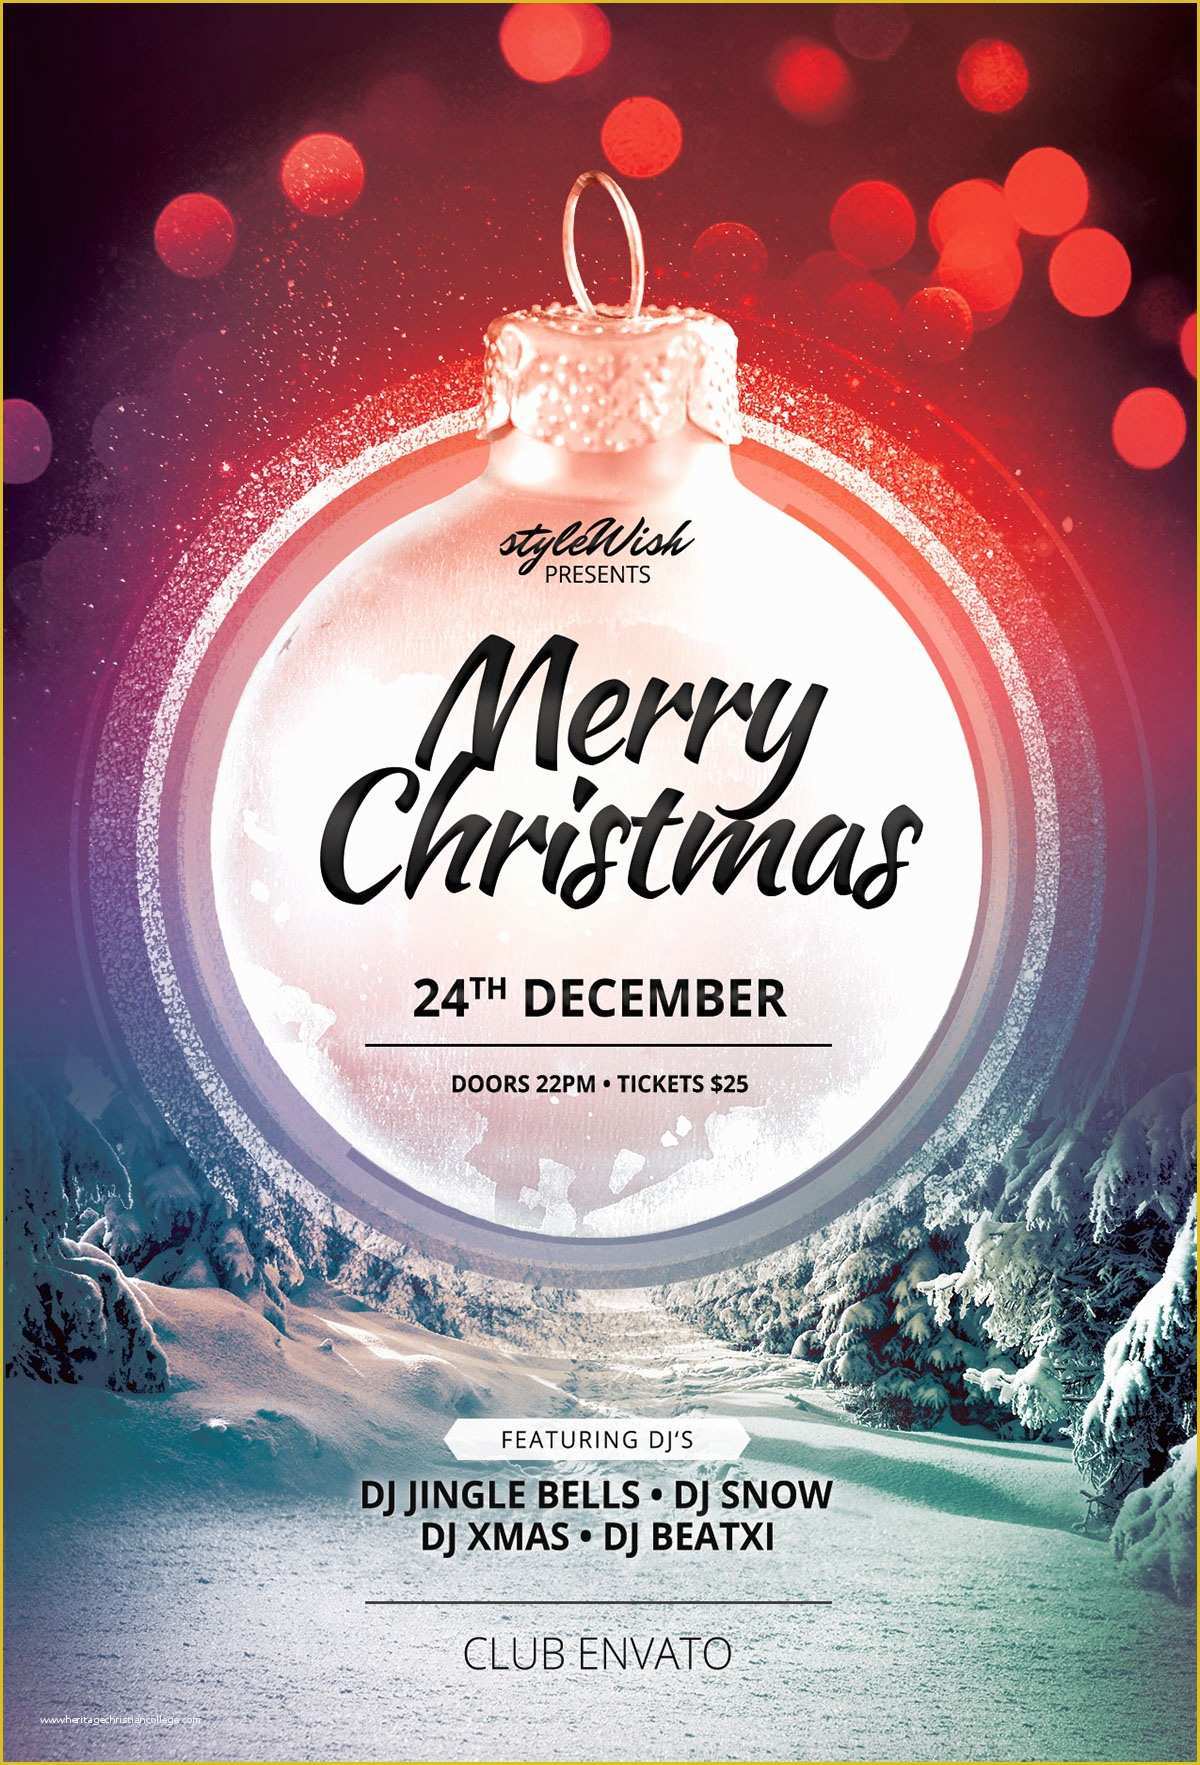 Free Printable Christmas Flyers Templates Of Merry Christmas Flyer Template On Behance